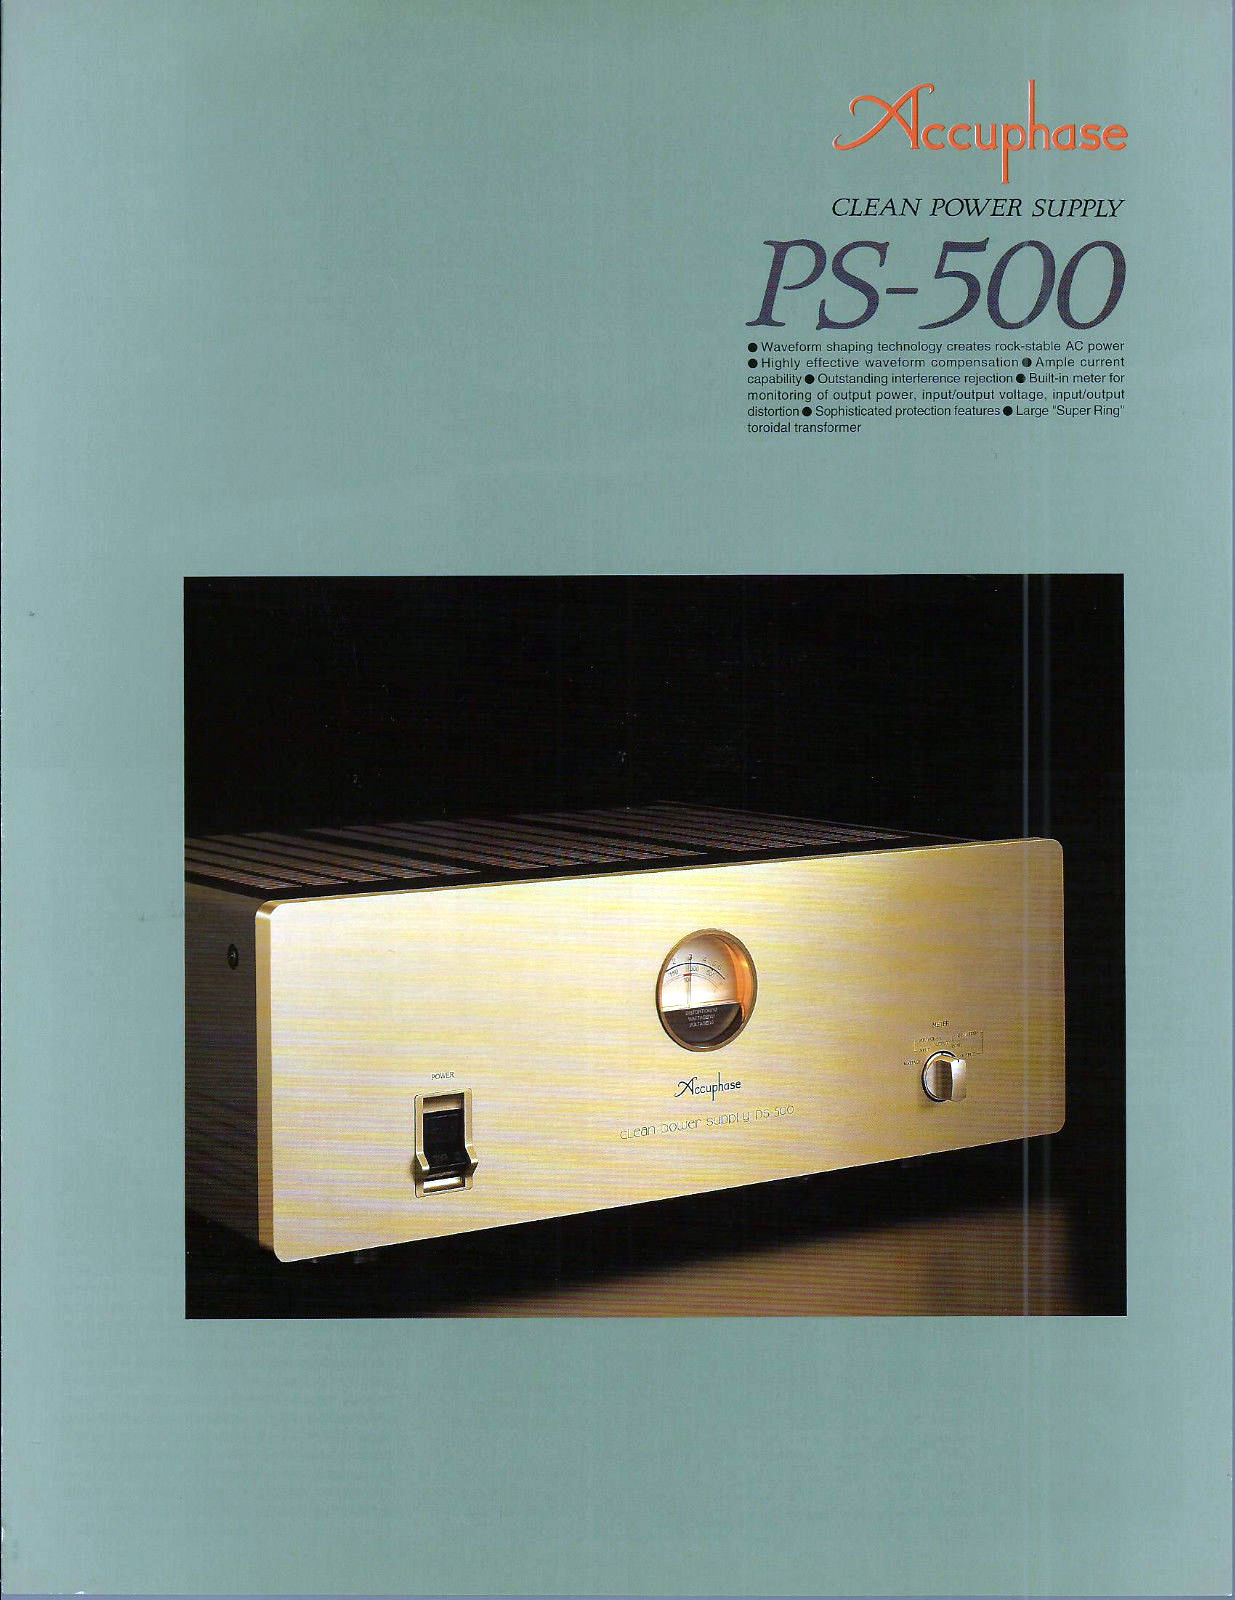 Accuphase PS-500-Prospekt-1.jpg